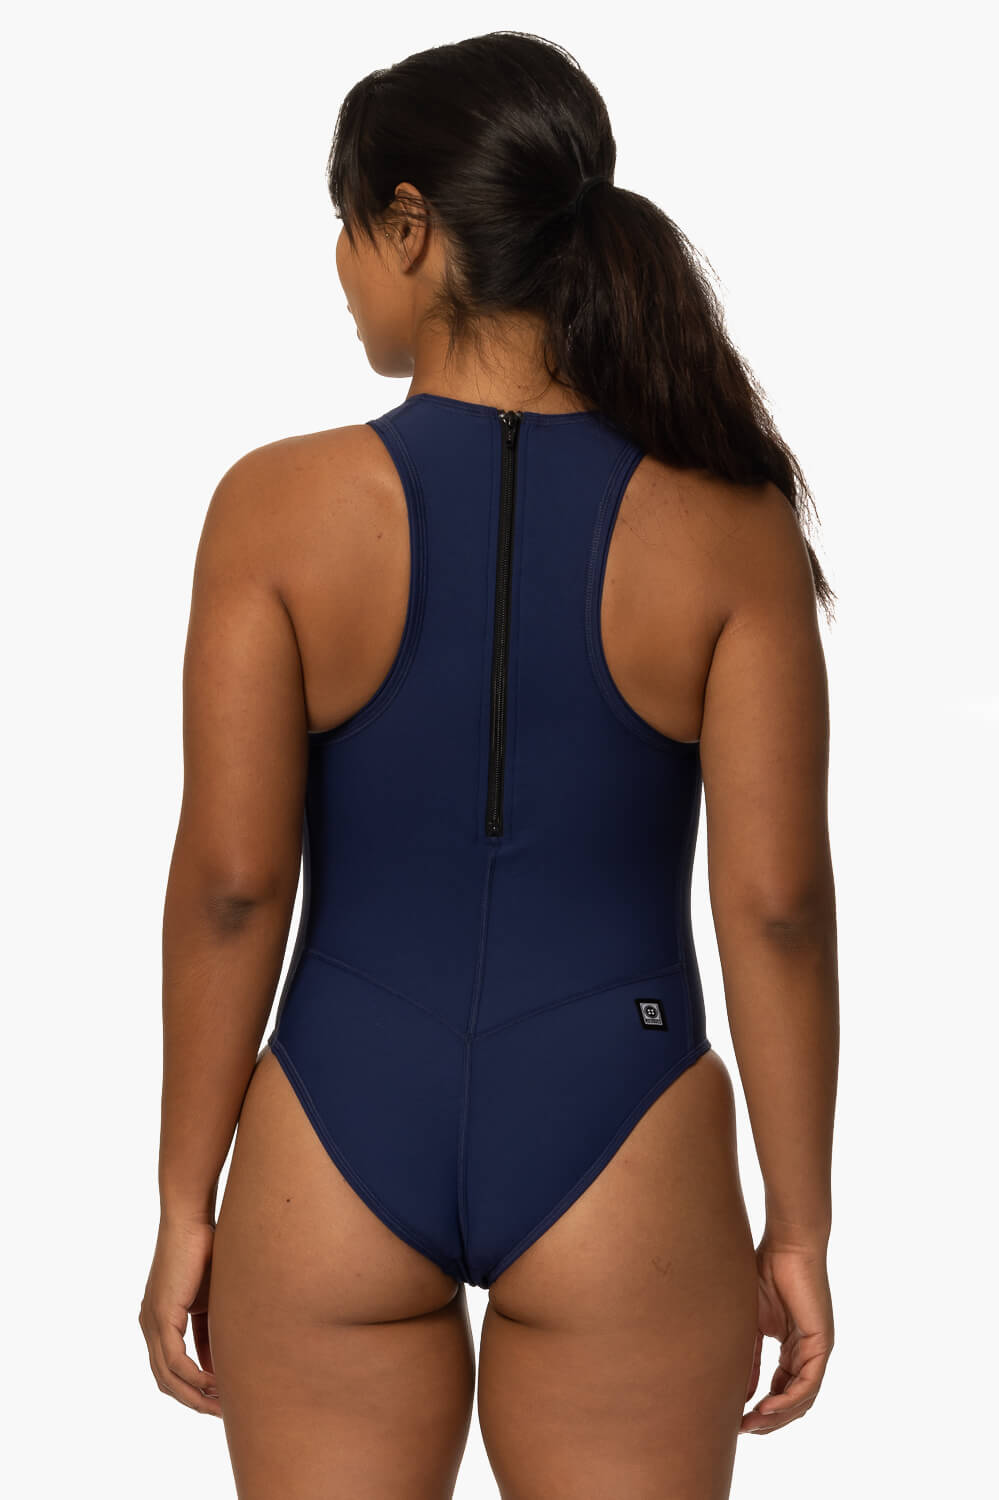 water polo suit women's female size 30 swimsuit high school team 